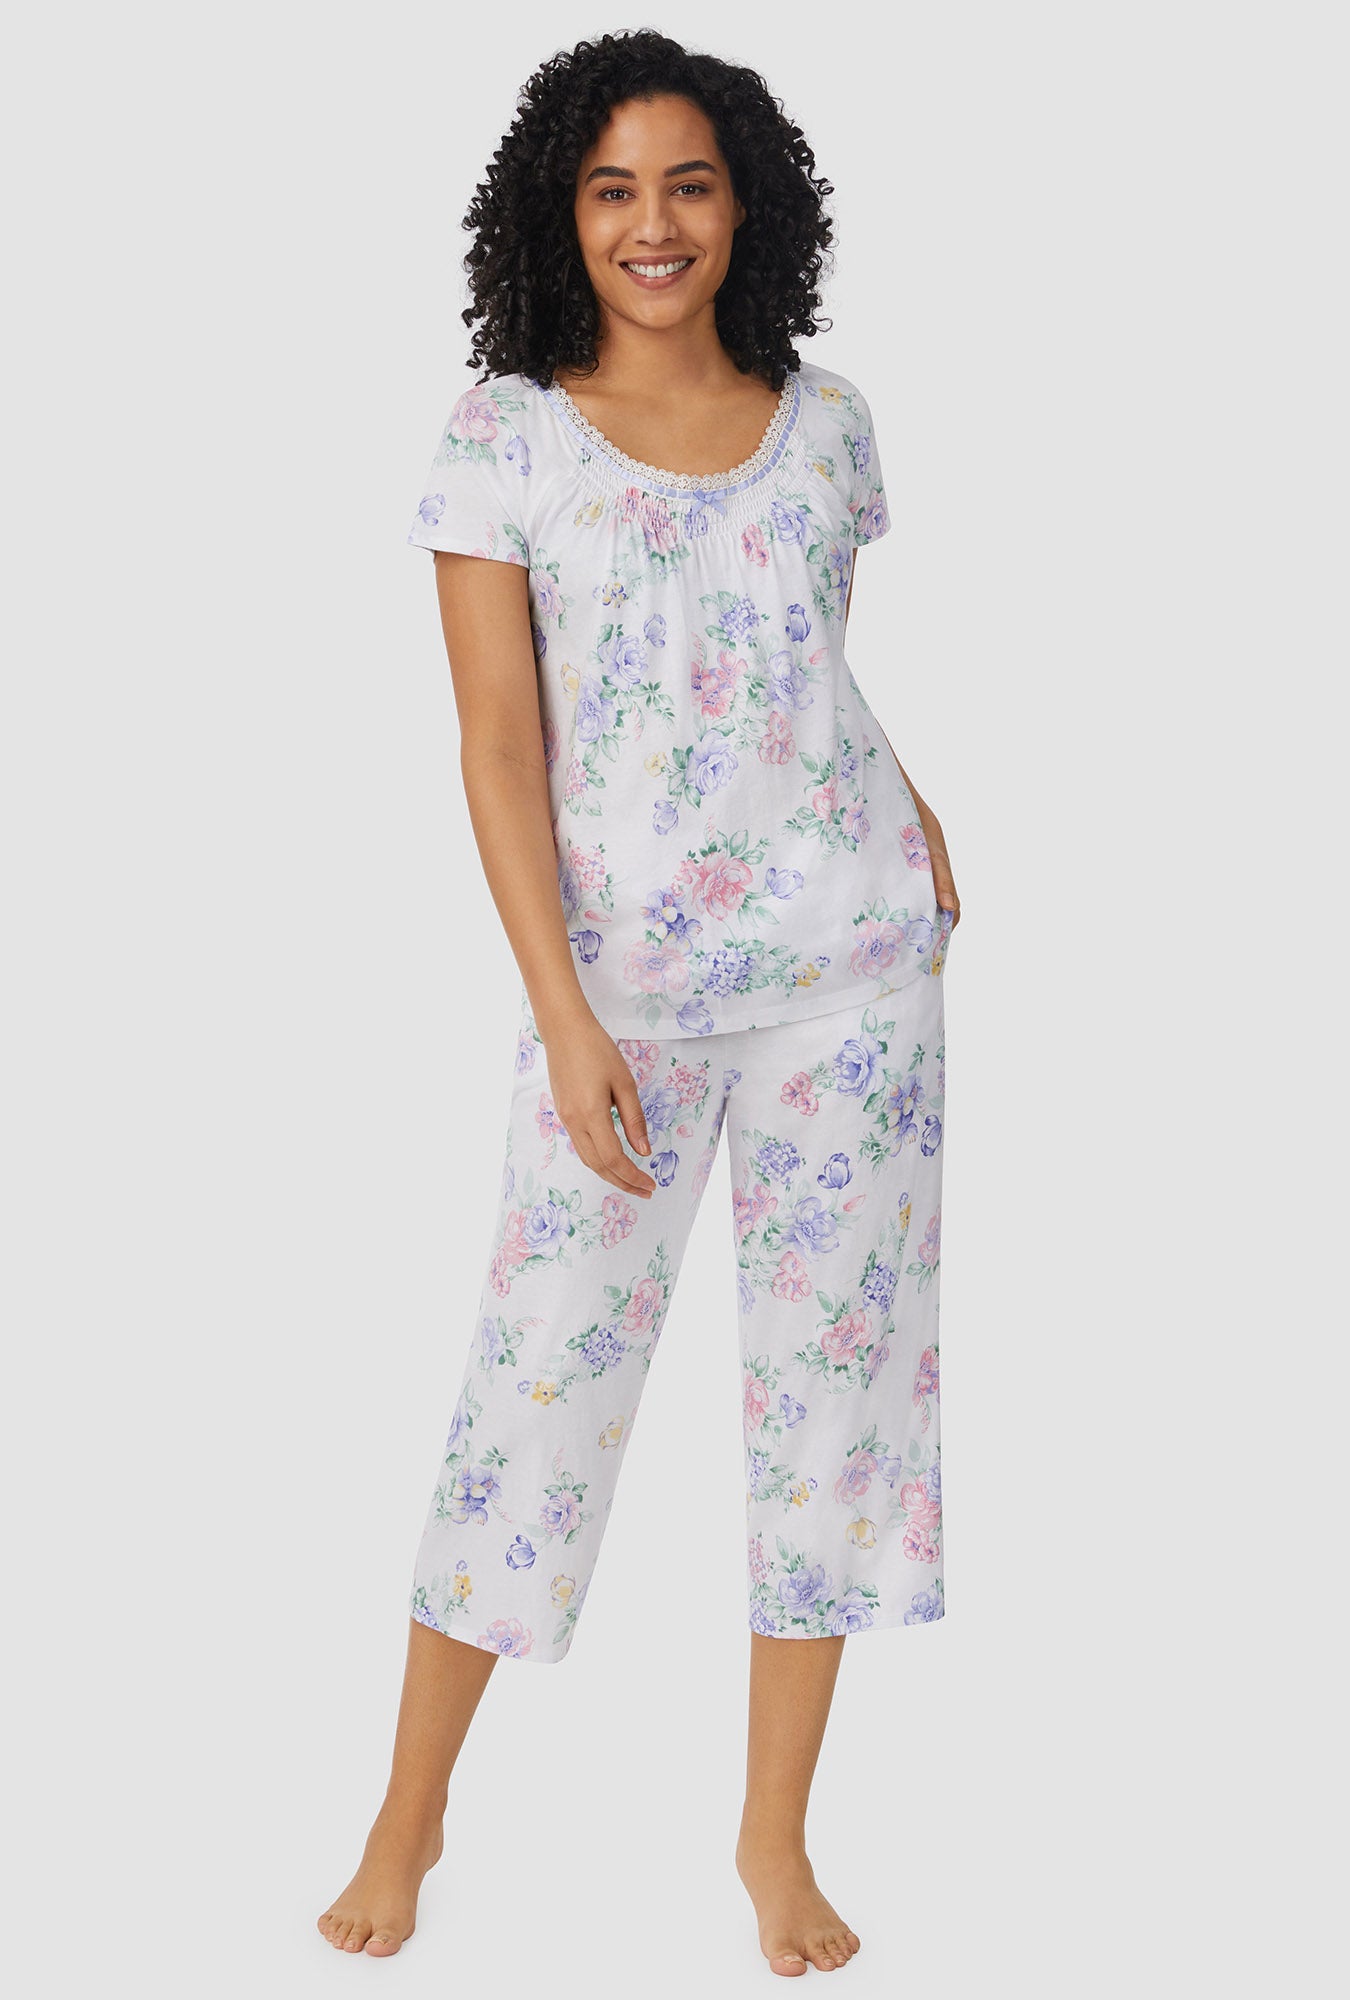 Blue and Pink Roses Cap Sleeve Capri PJ Set - Aria Sleepwear